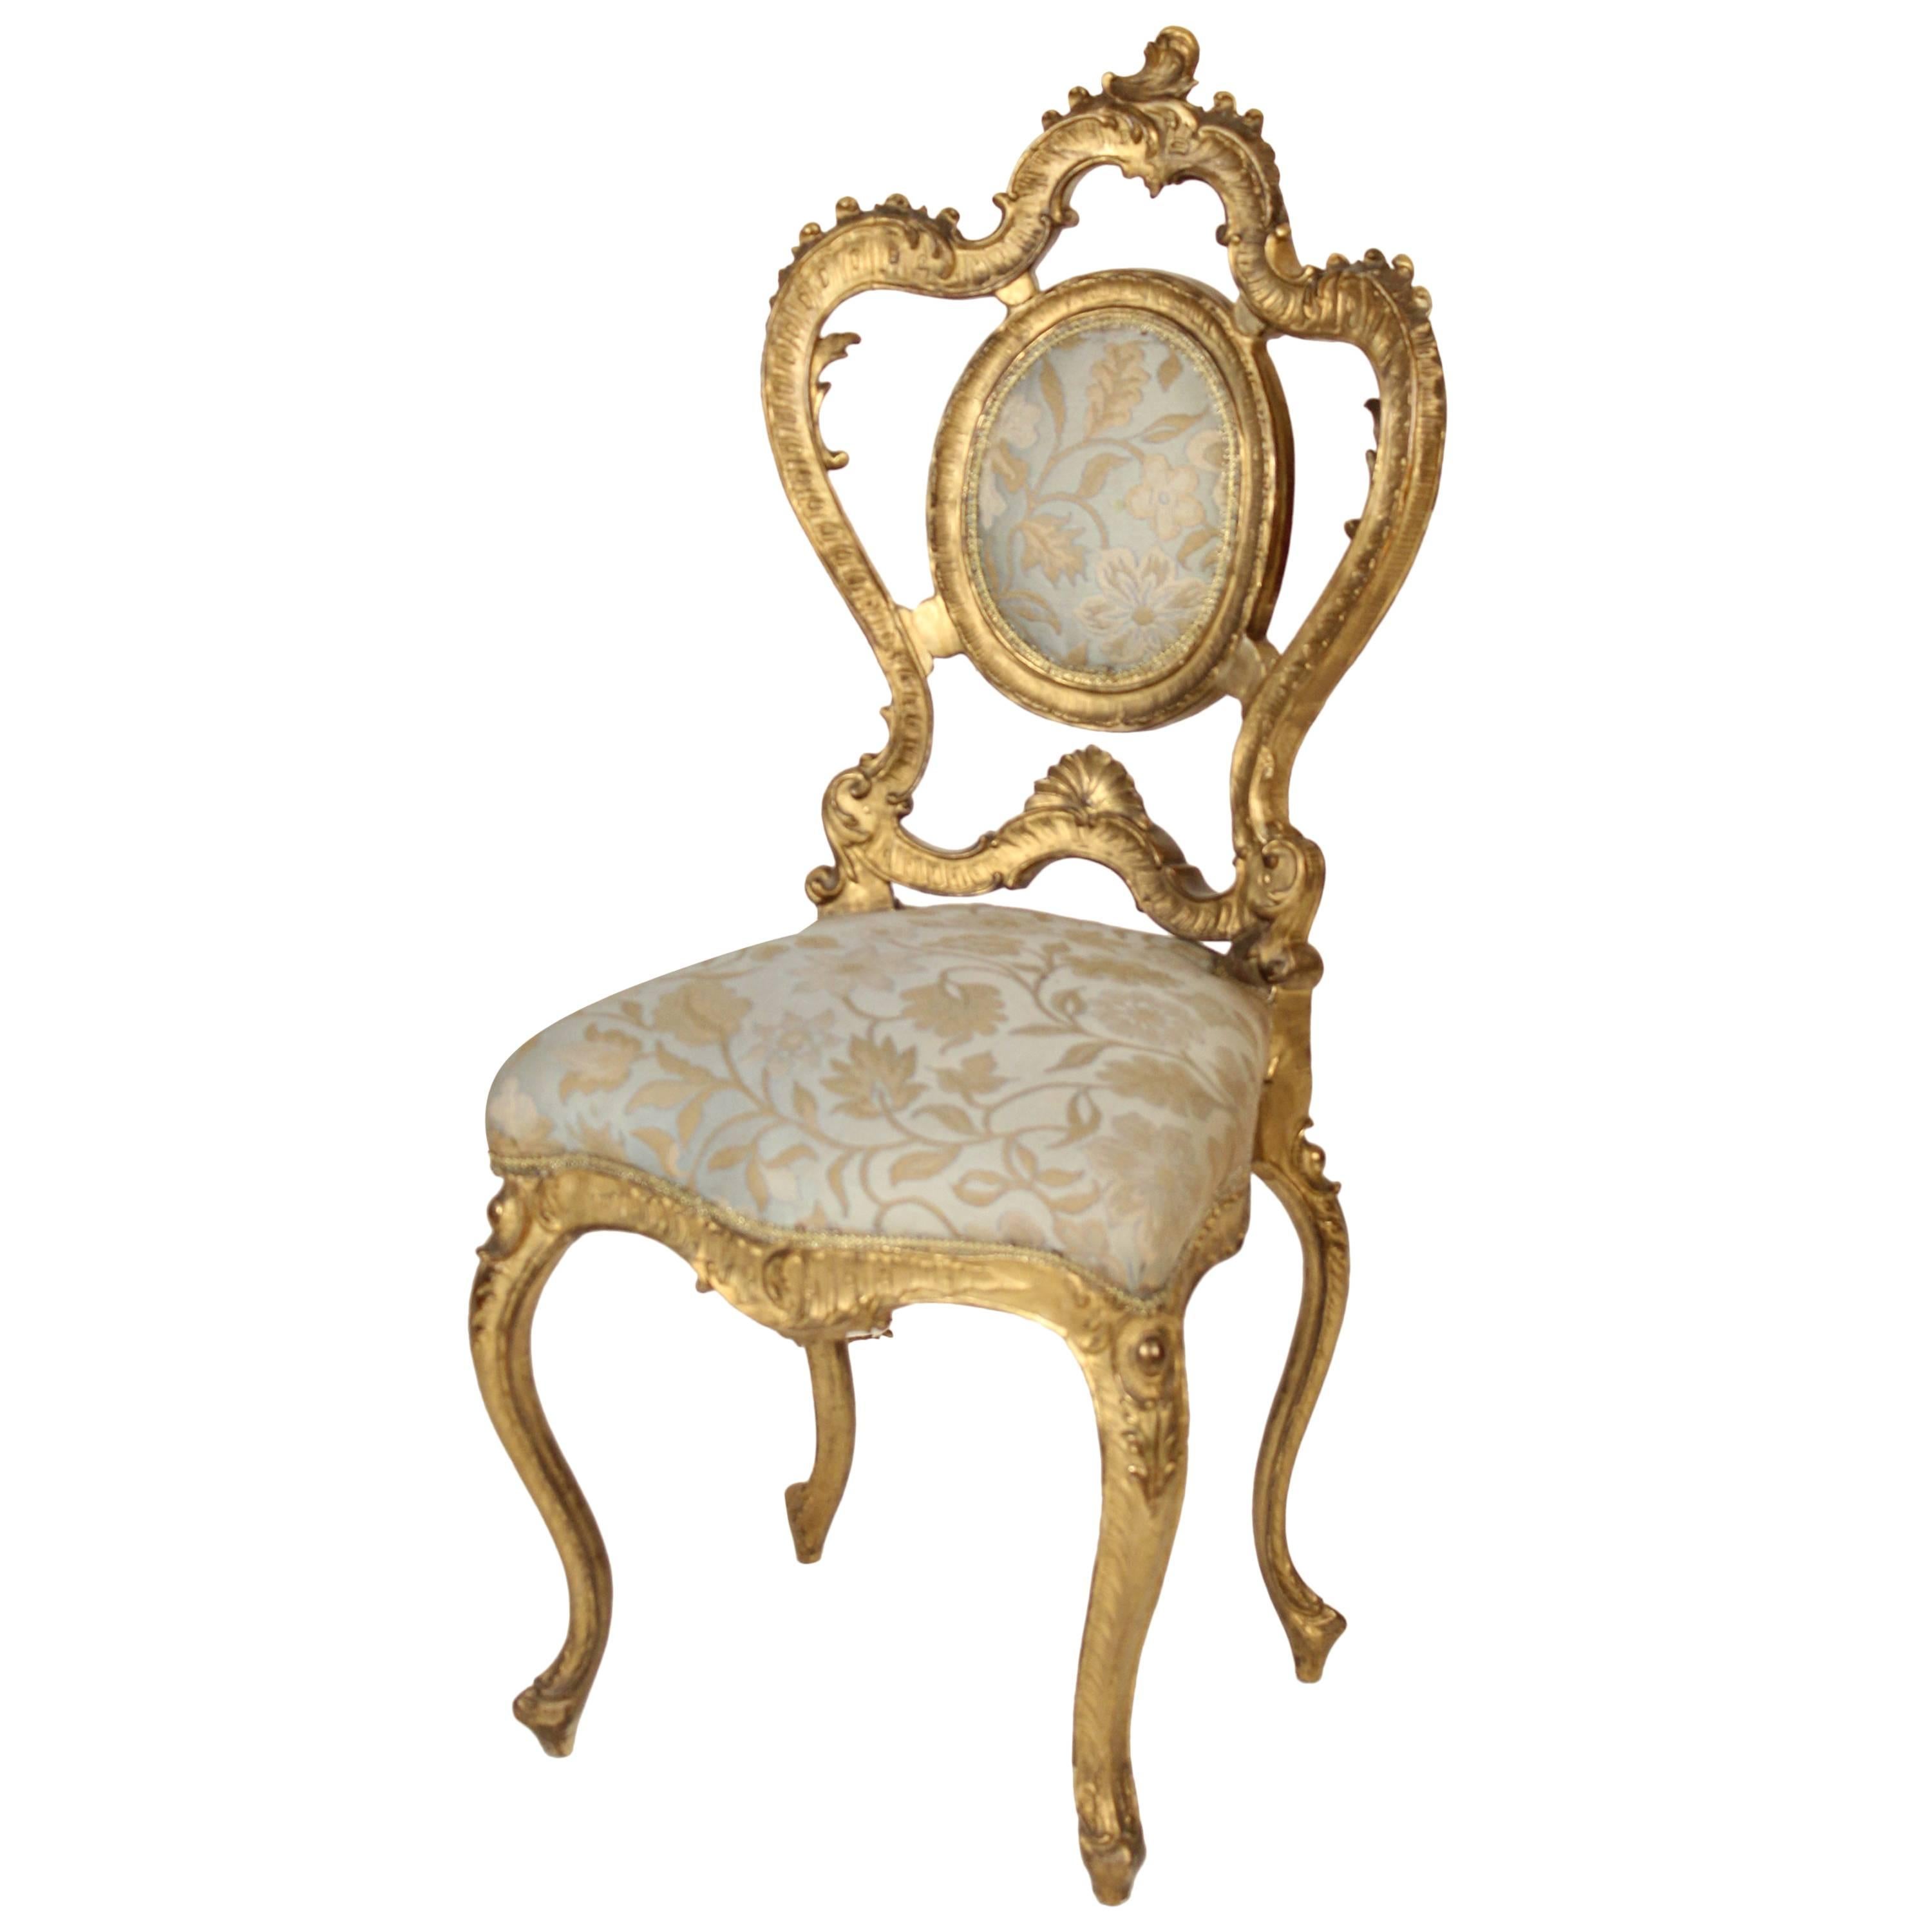 Rococo Revival Vanity Chair